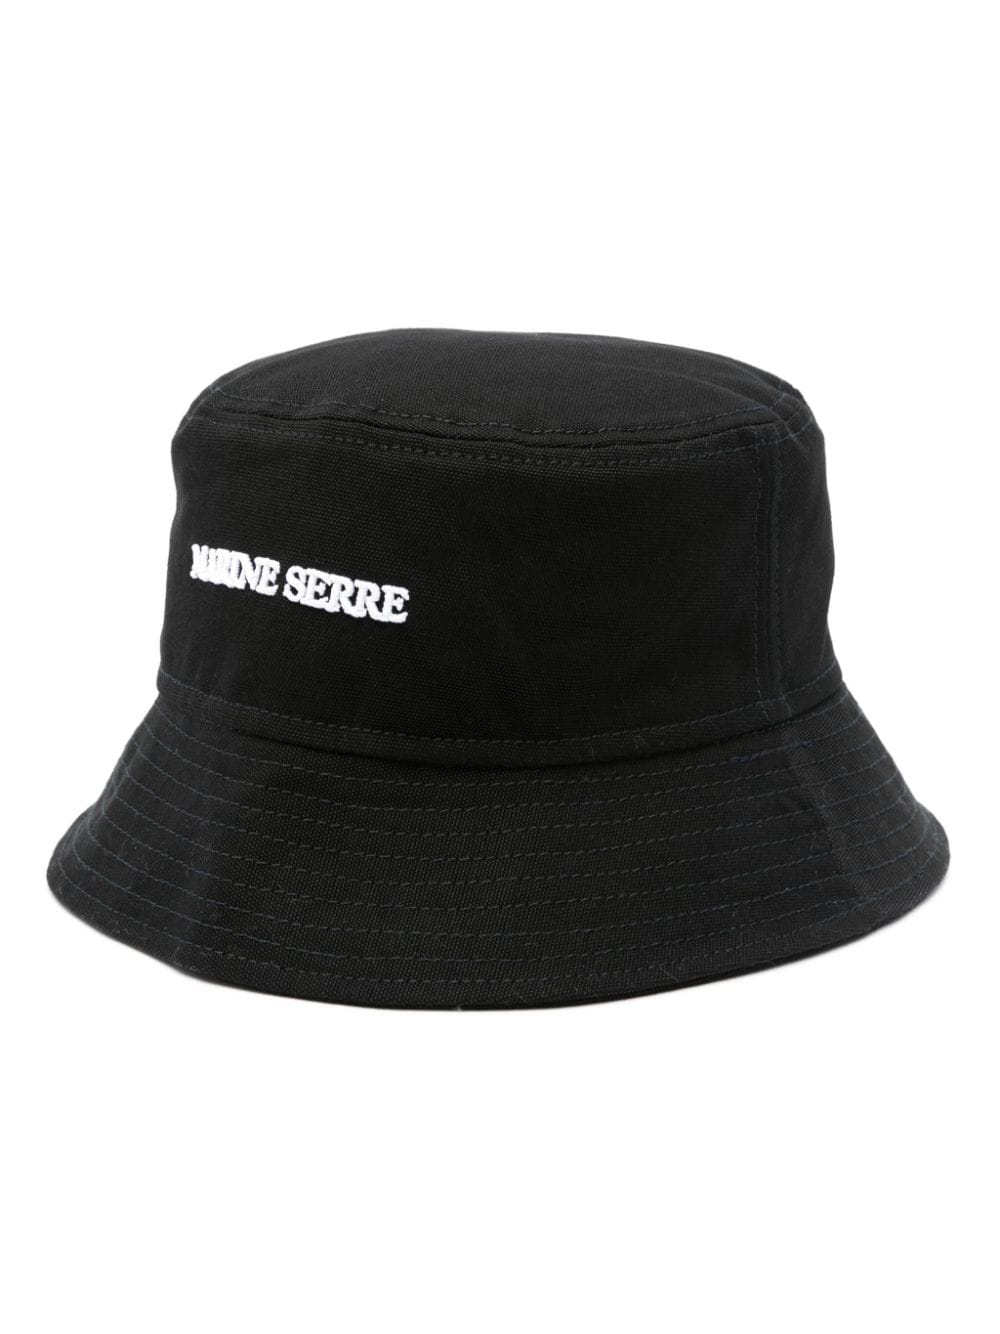 Marine Serre MARINE SERRE- Logo Bucket Hat